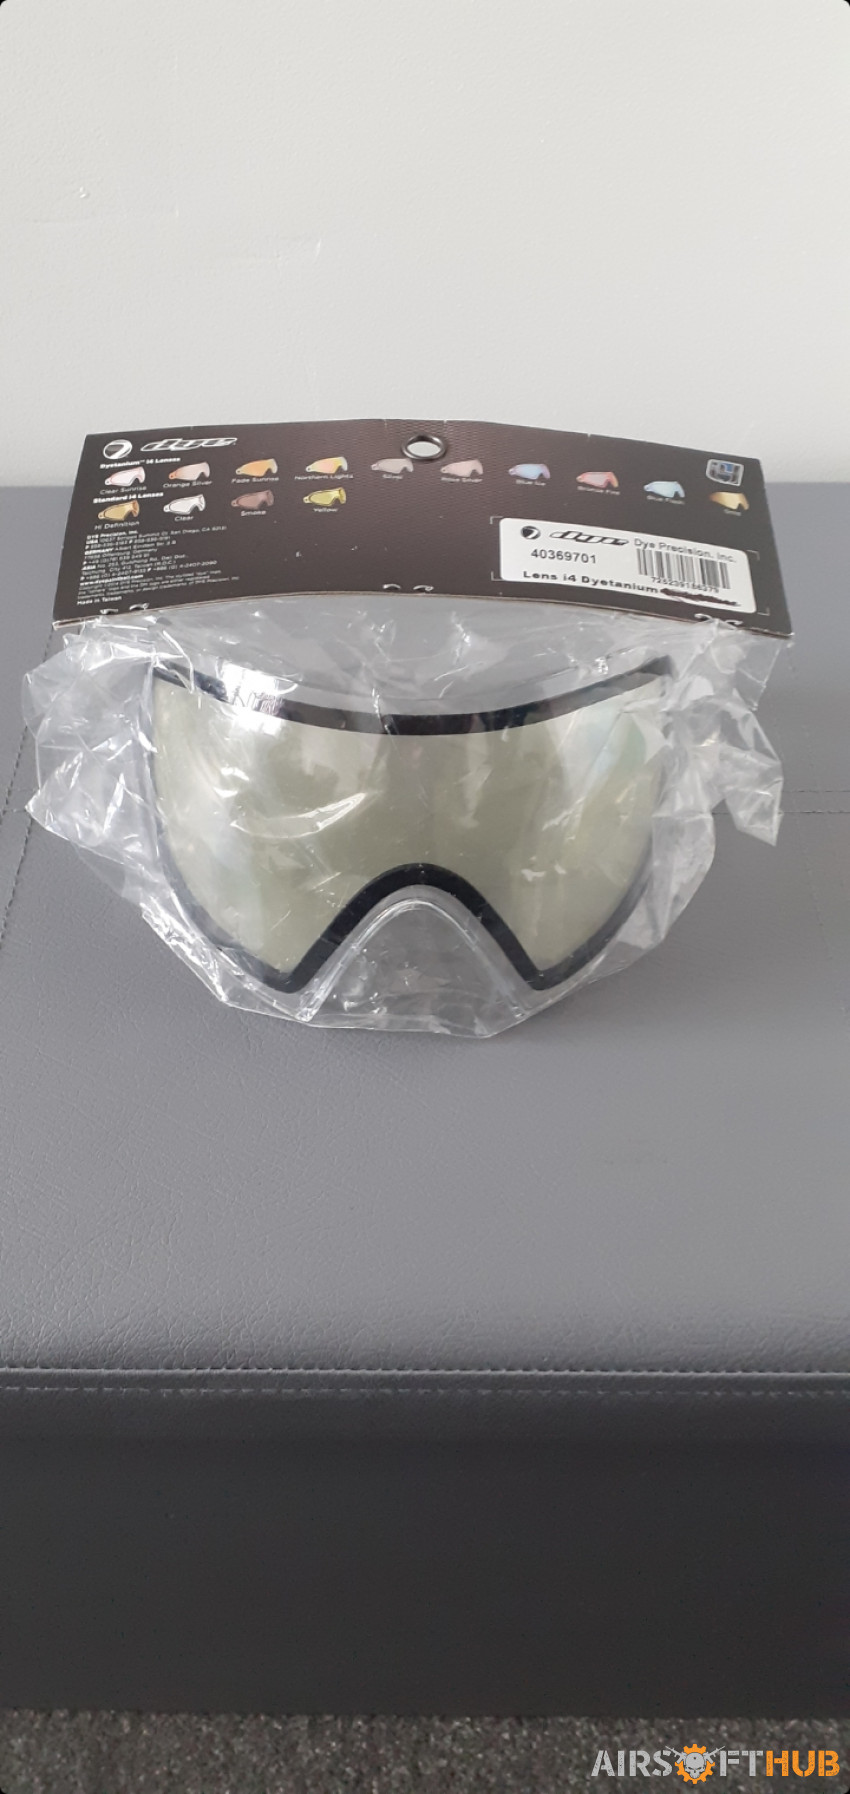 Dye i4 DyeCam Mask - Used airsoft equipment